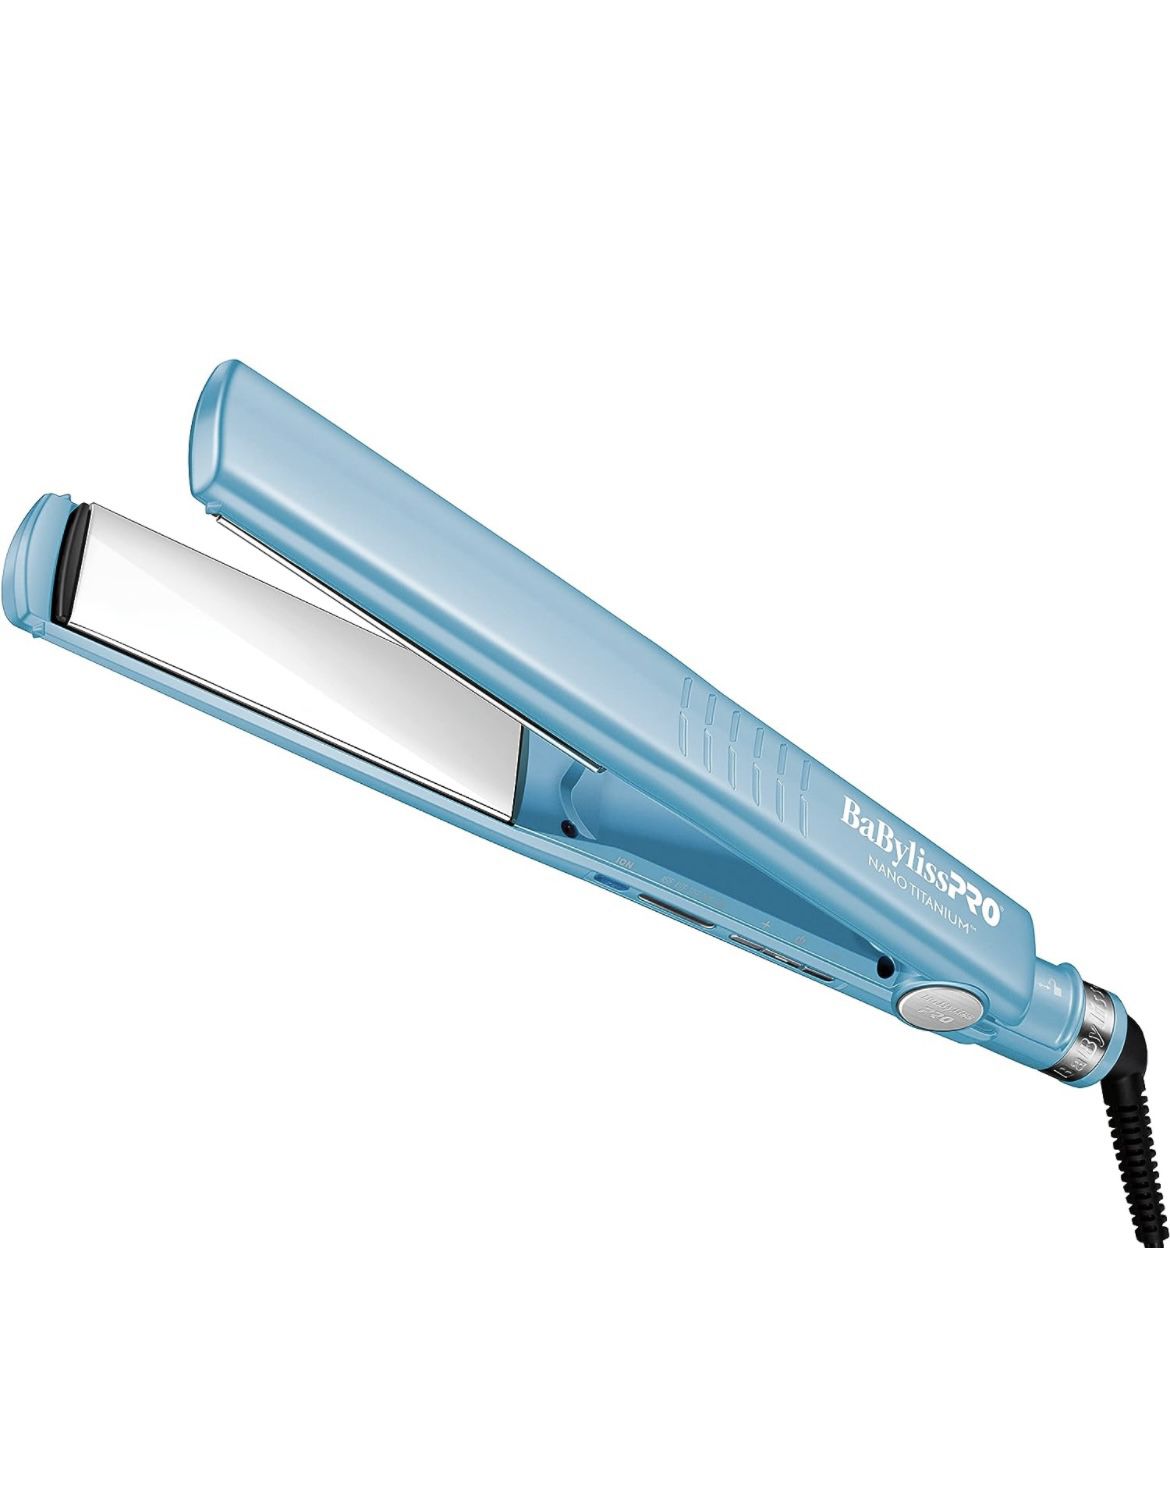 BaBylissPRO Flat Iron Hair Straightener, 1-1/4 Inch Nano Titanium Ionic, Hair Styling Tools & Appliances, Blue